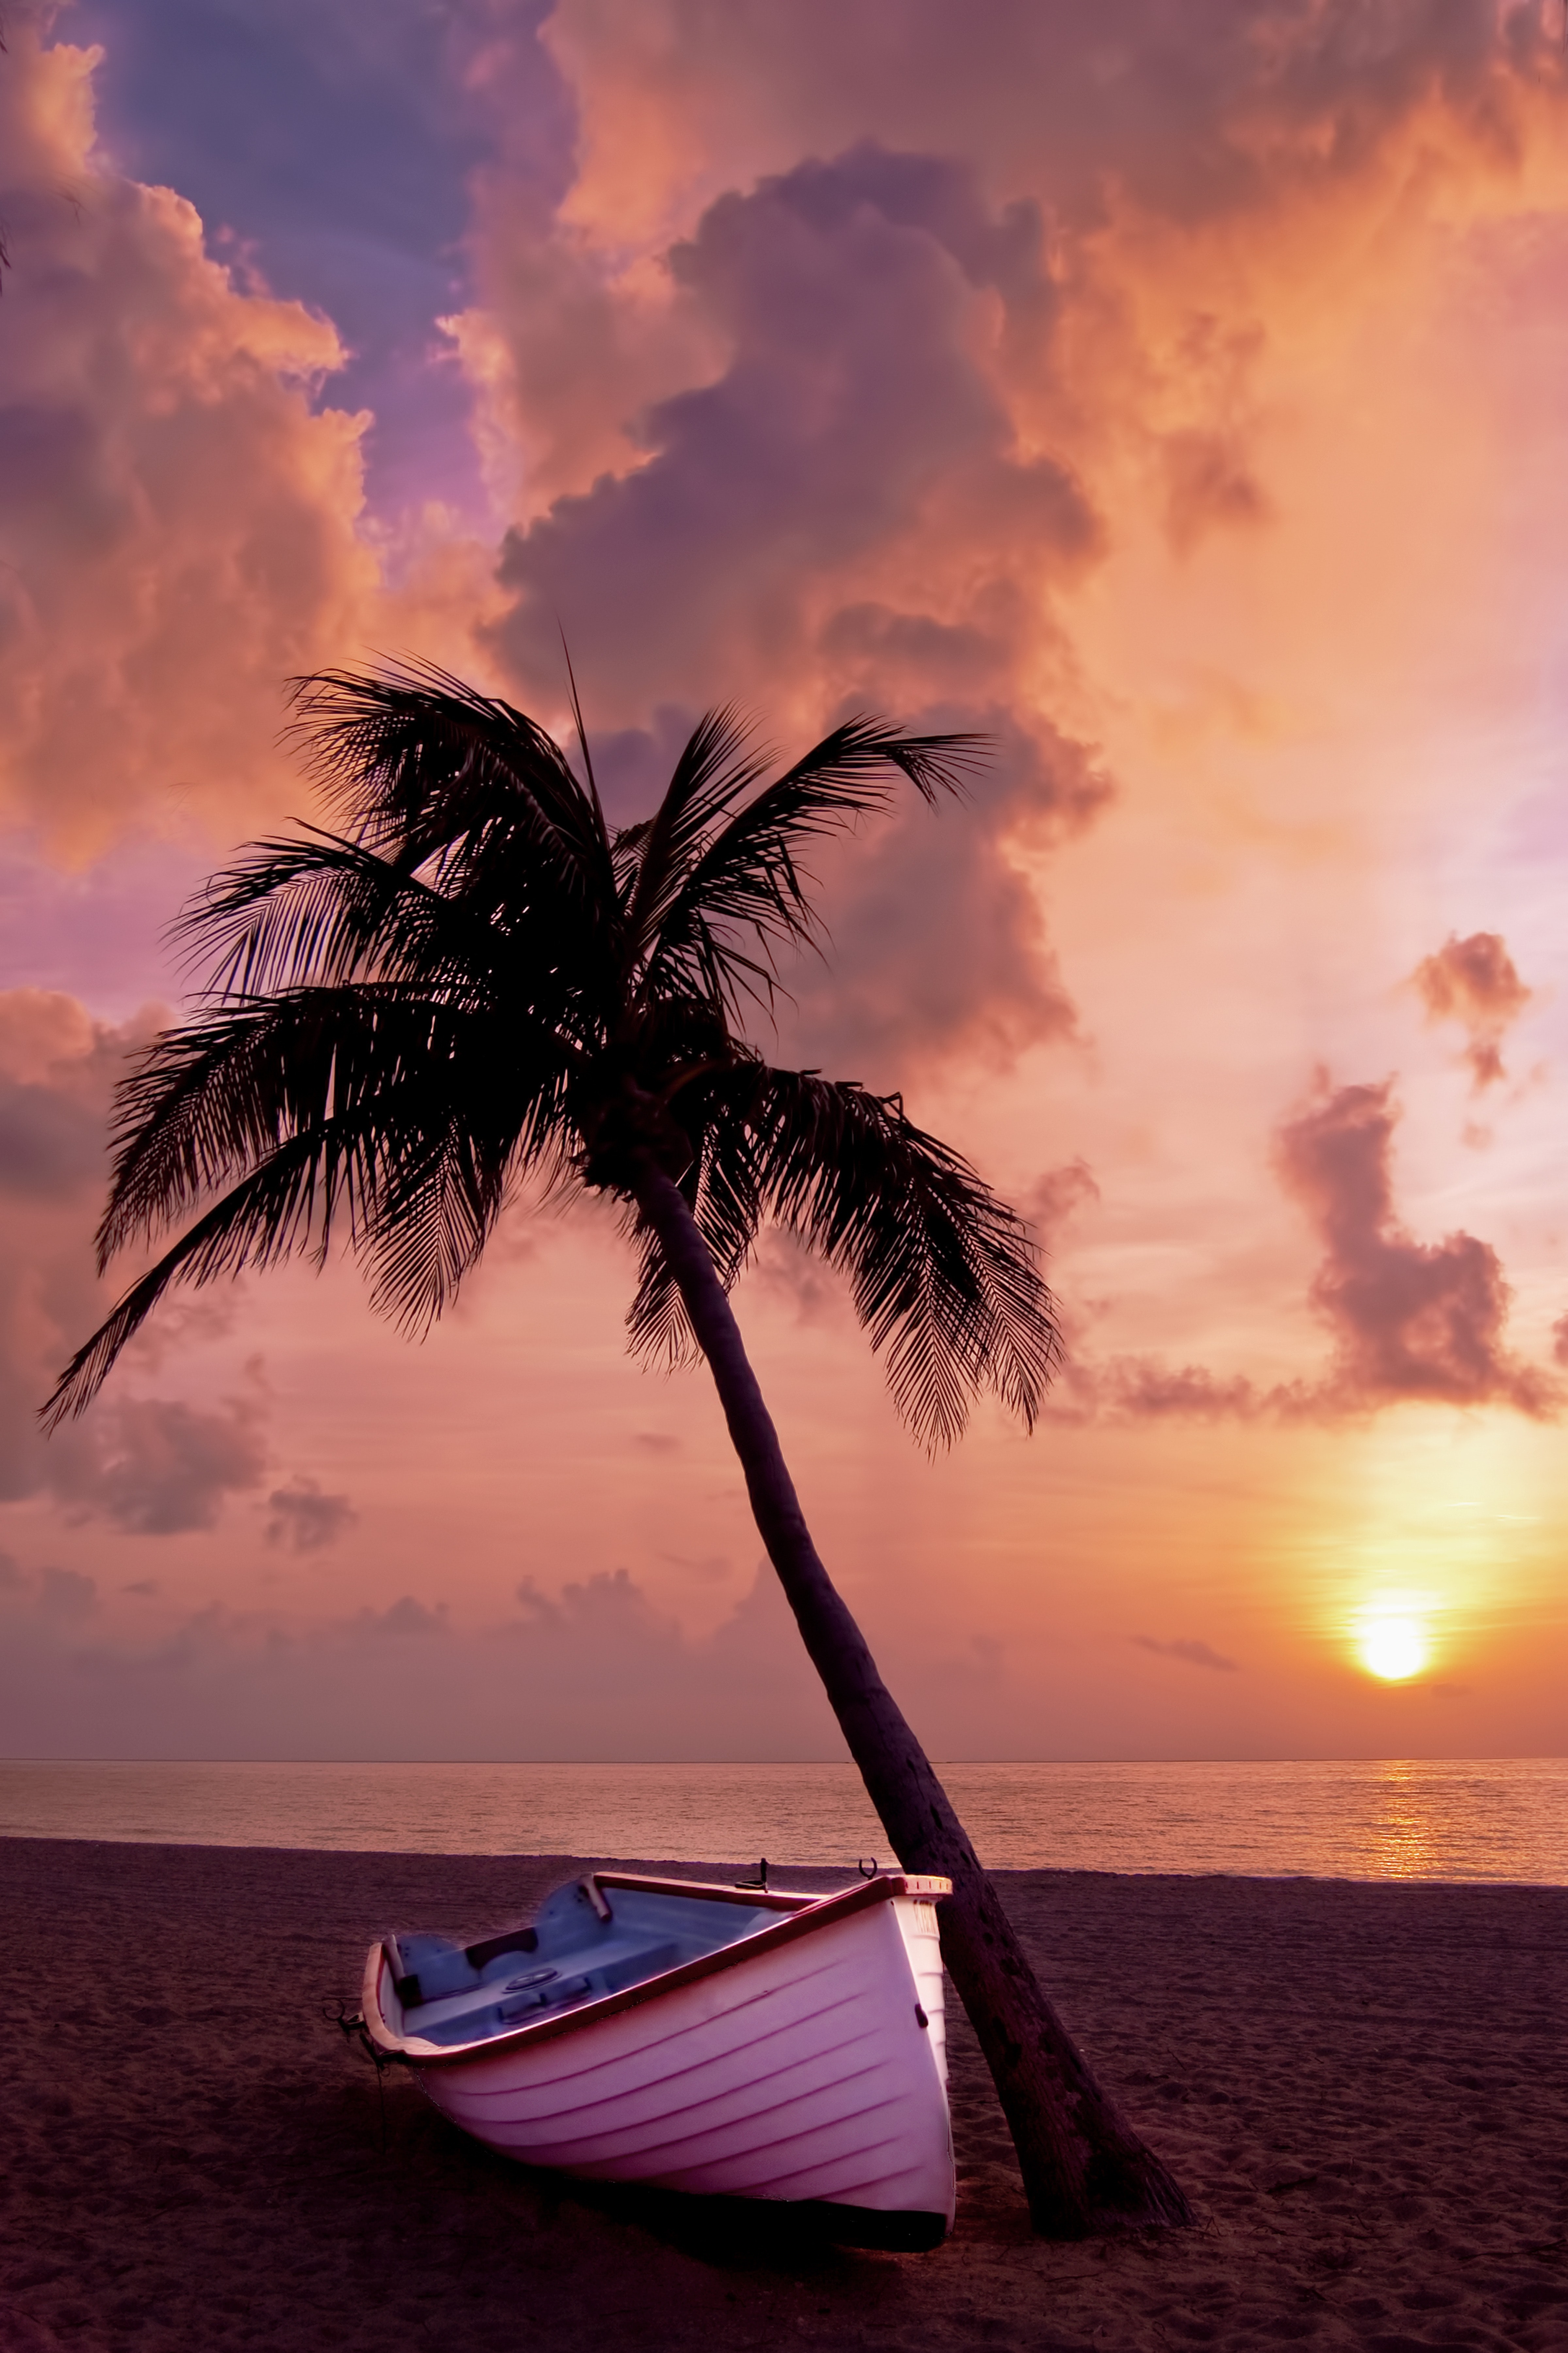 White Boat Beside Tree Under Orange Sky during Sunset, Beach, Seascape, Sunset, Sunrise, HQ Photo